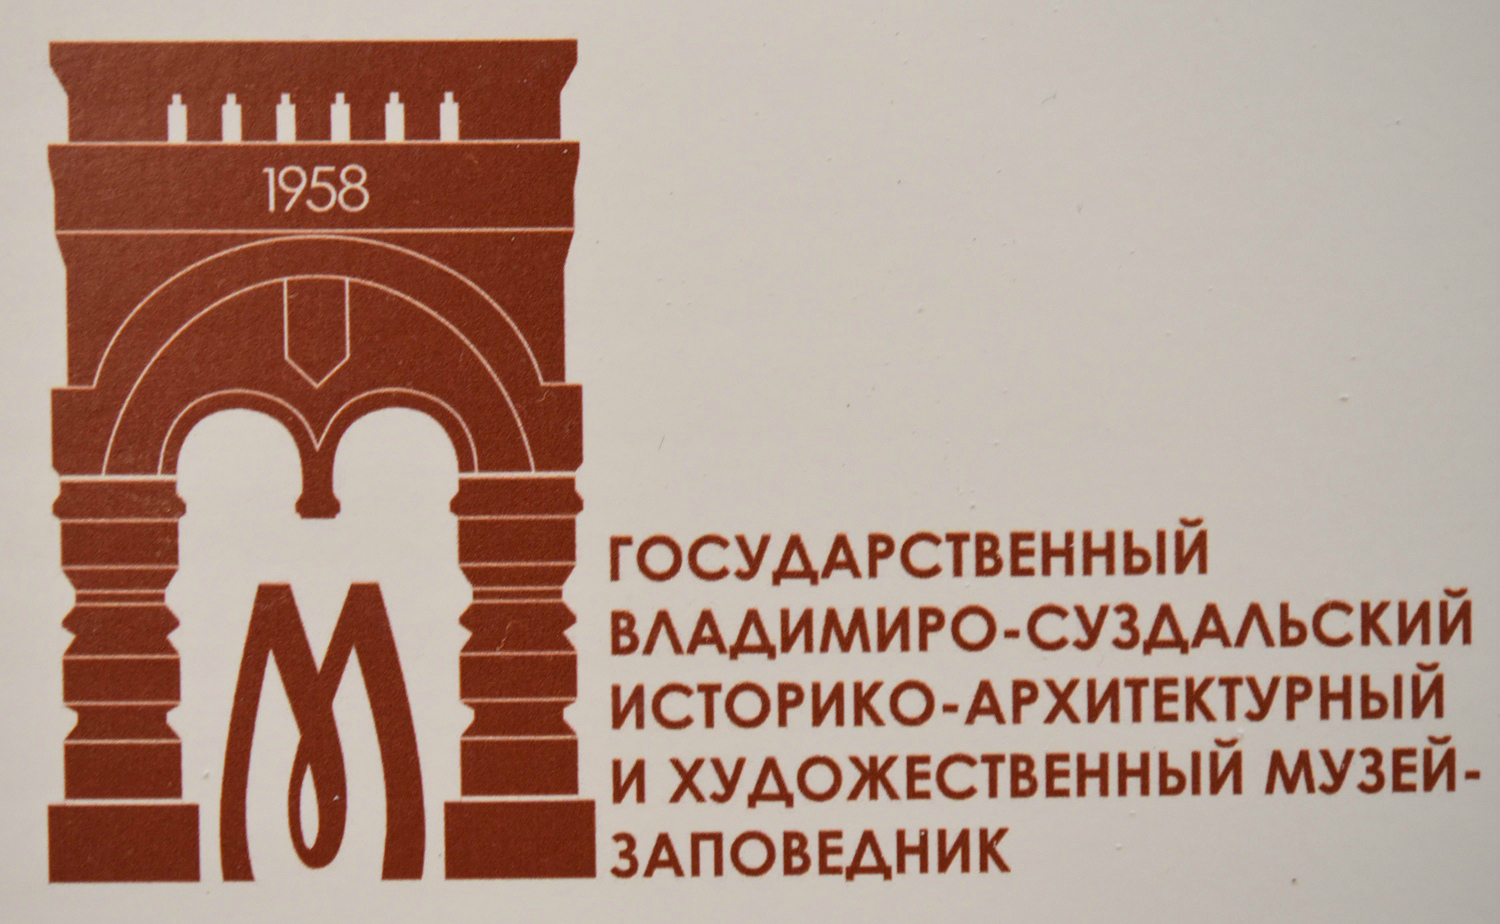 Владимиро суздальский музей